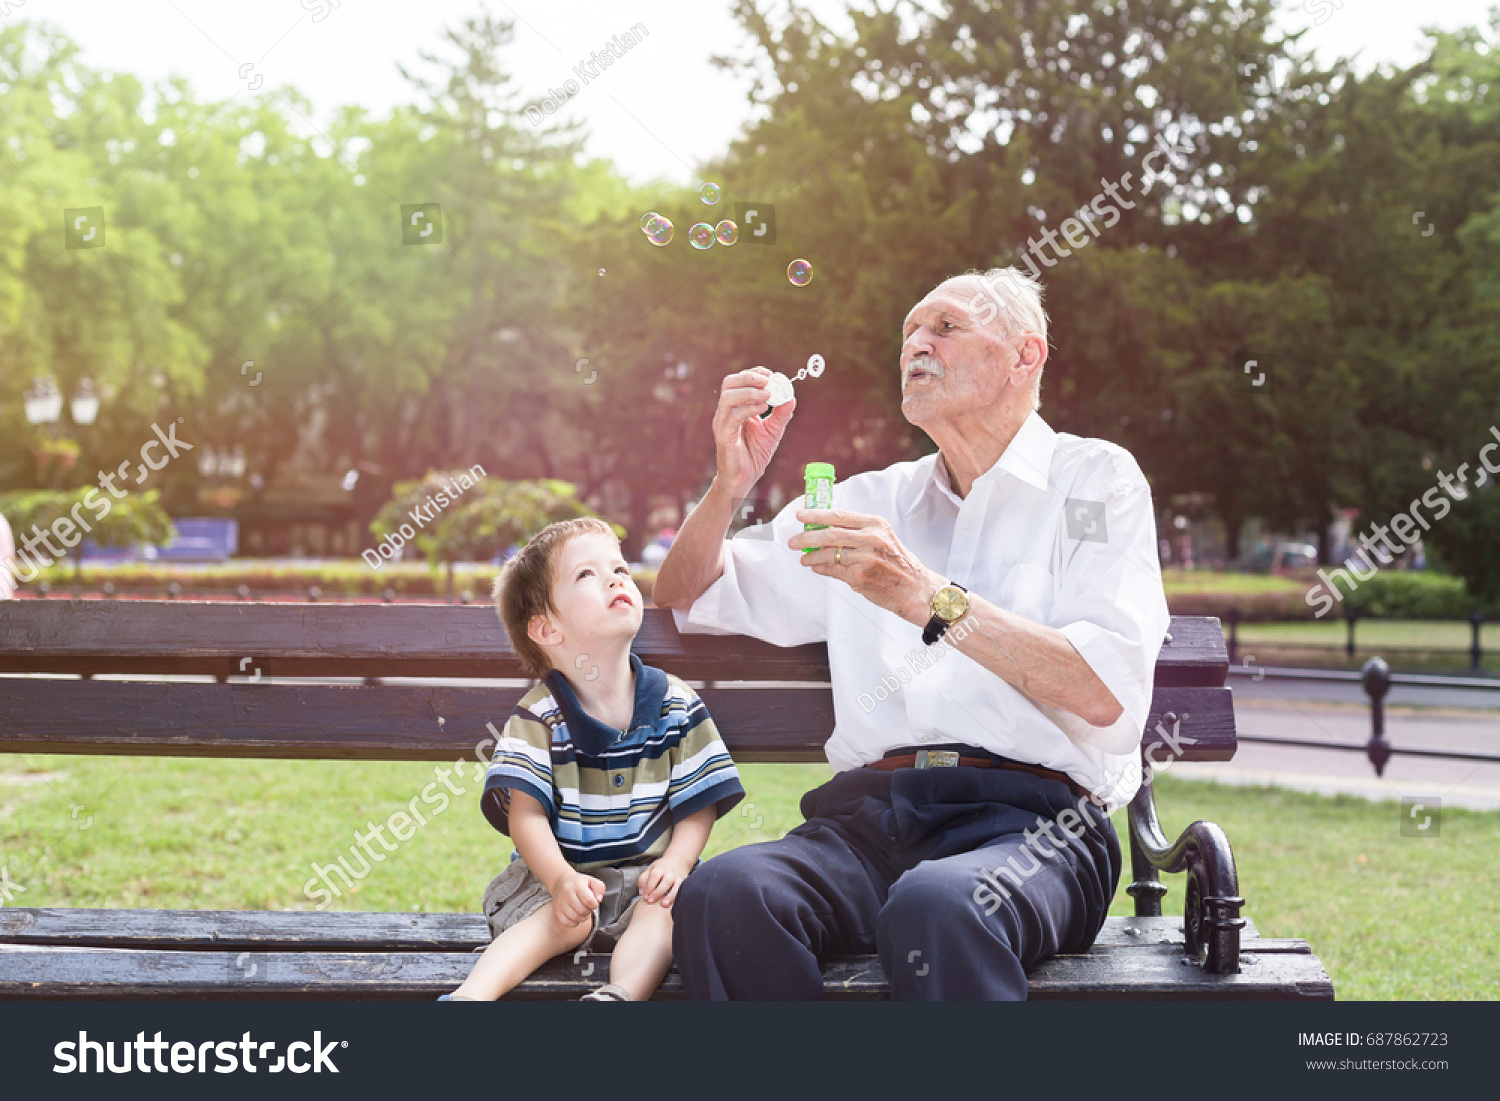 grandfather blowing soap bubbles to his grandchild #687862723